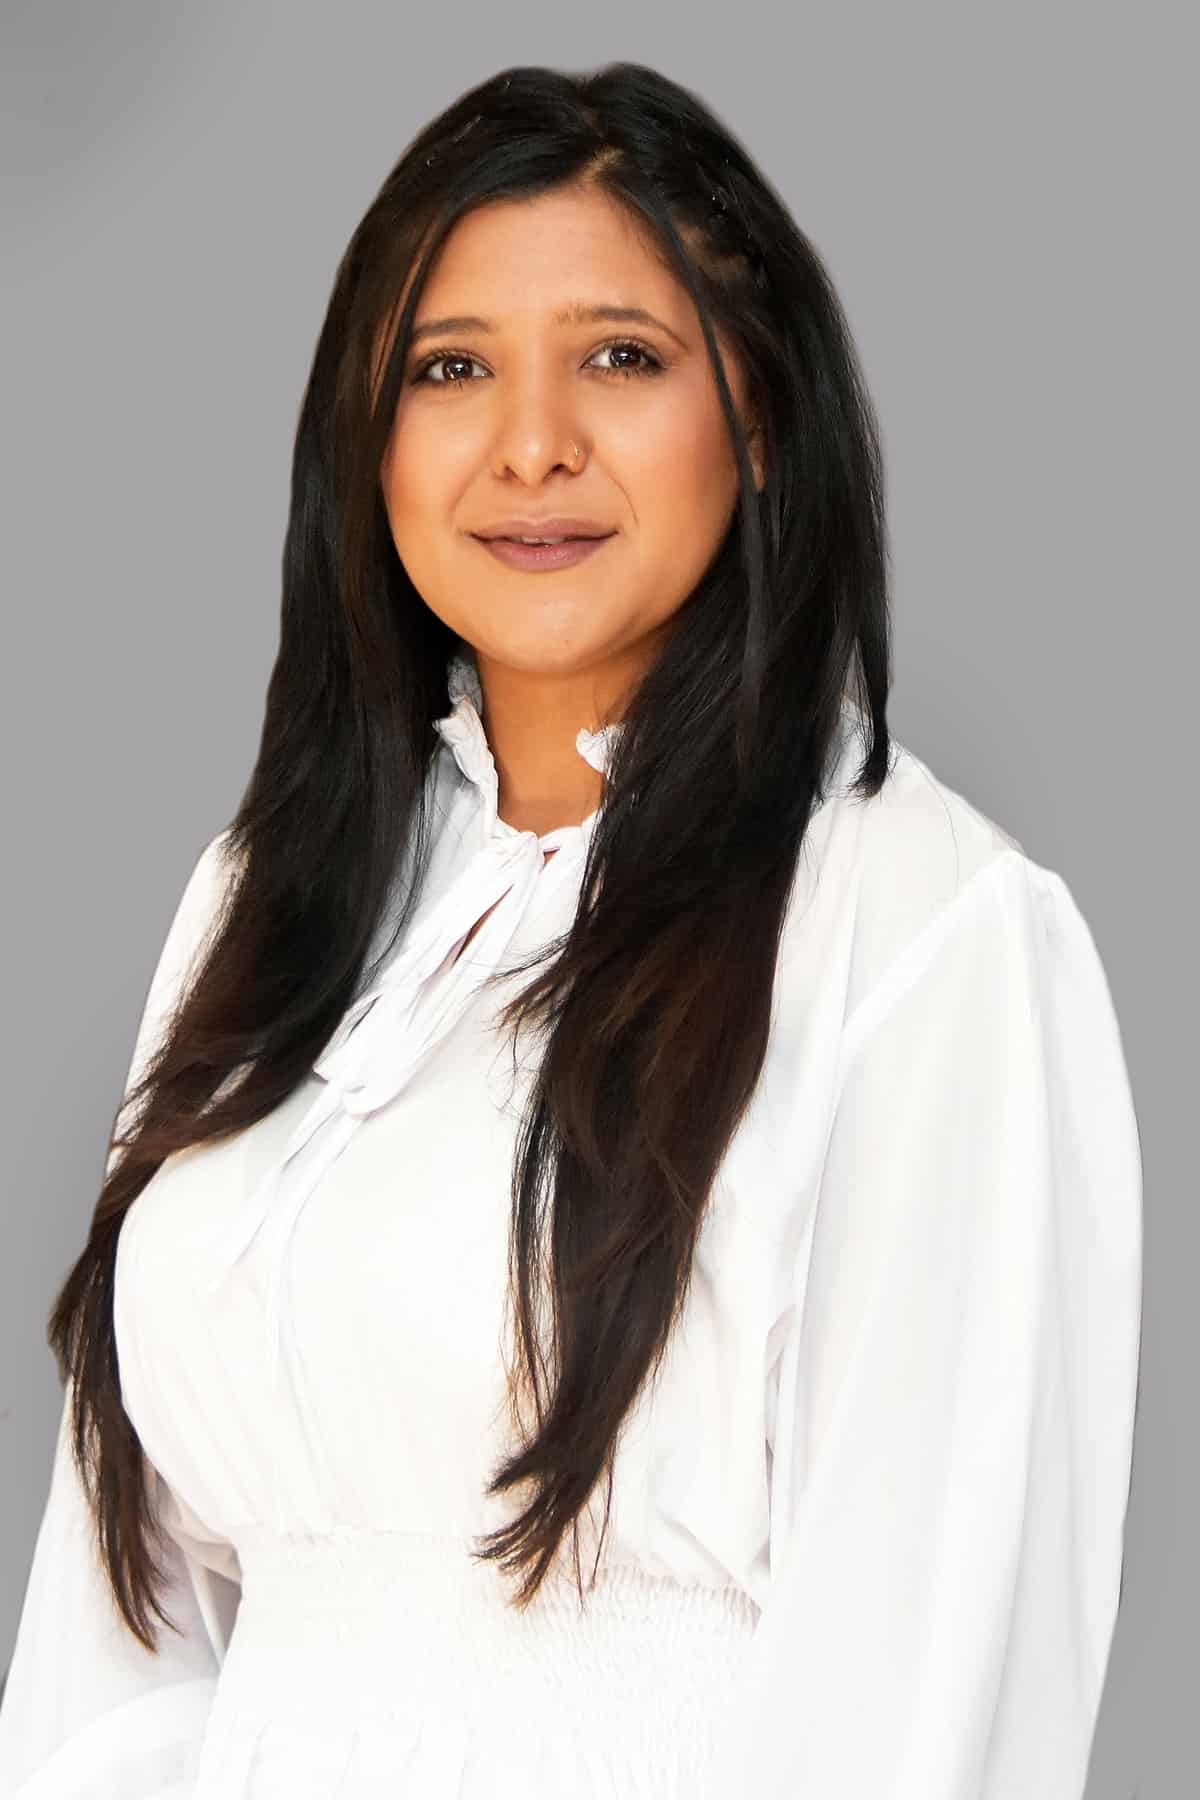 Ms Zakiyya Abdool Satar